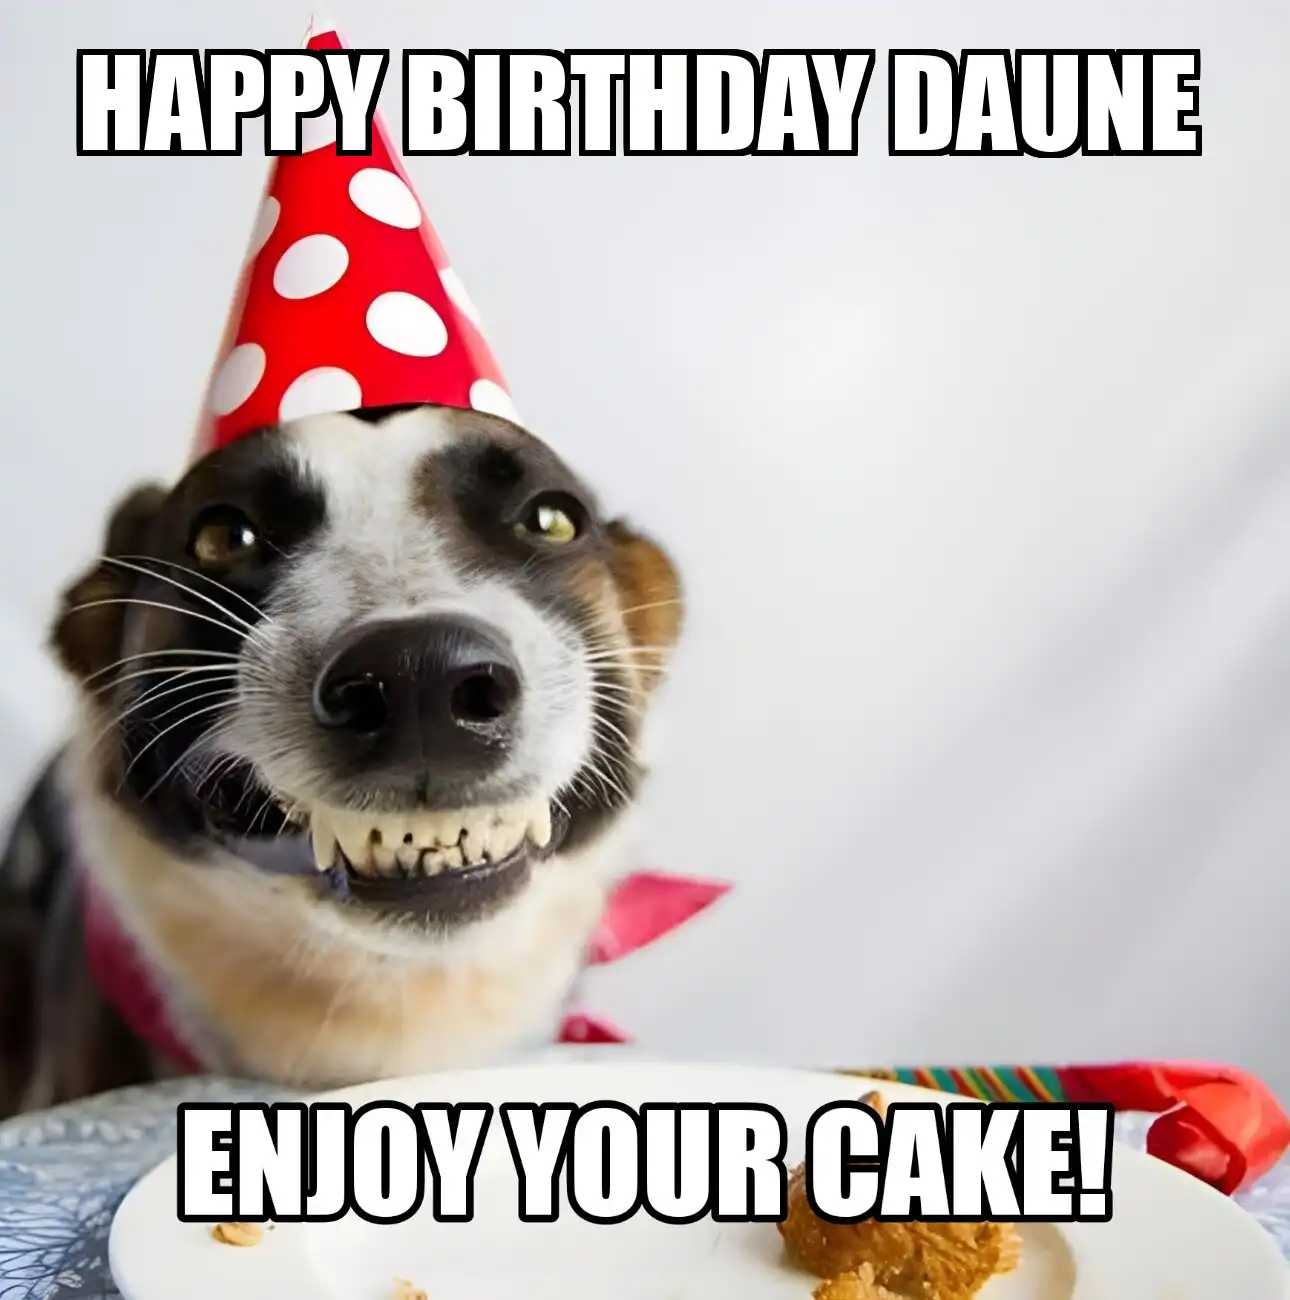 Happy Birthday Daune Enjoy Your Cake Dog Meme